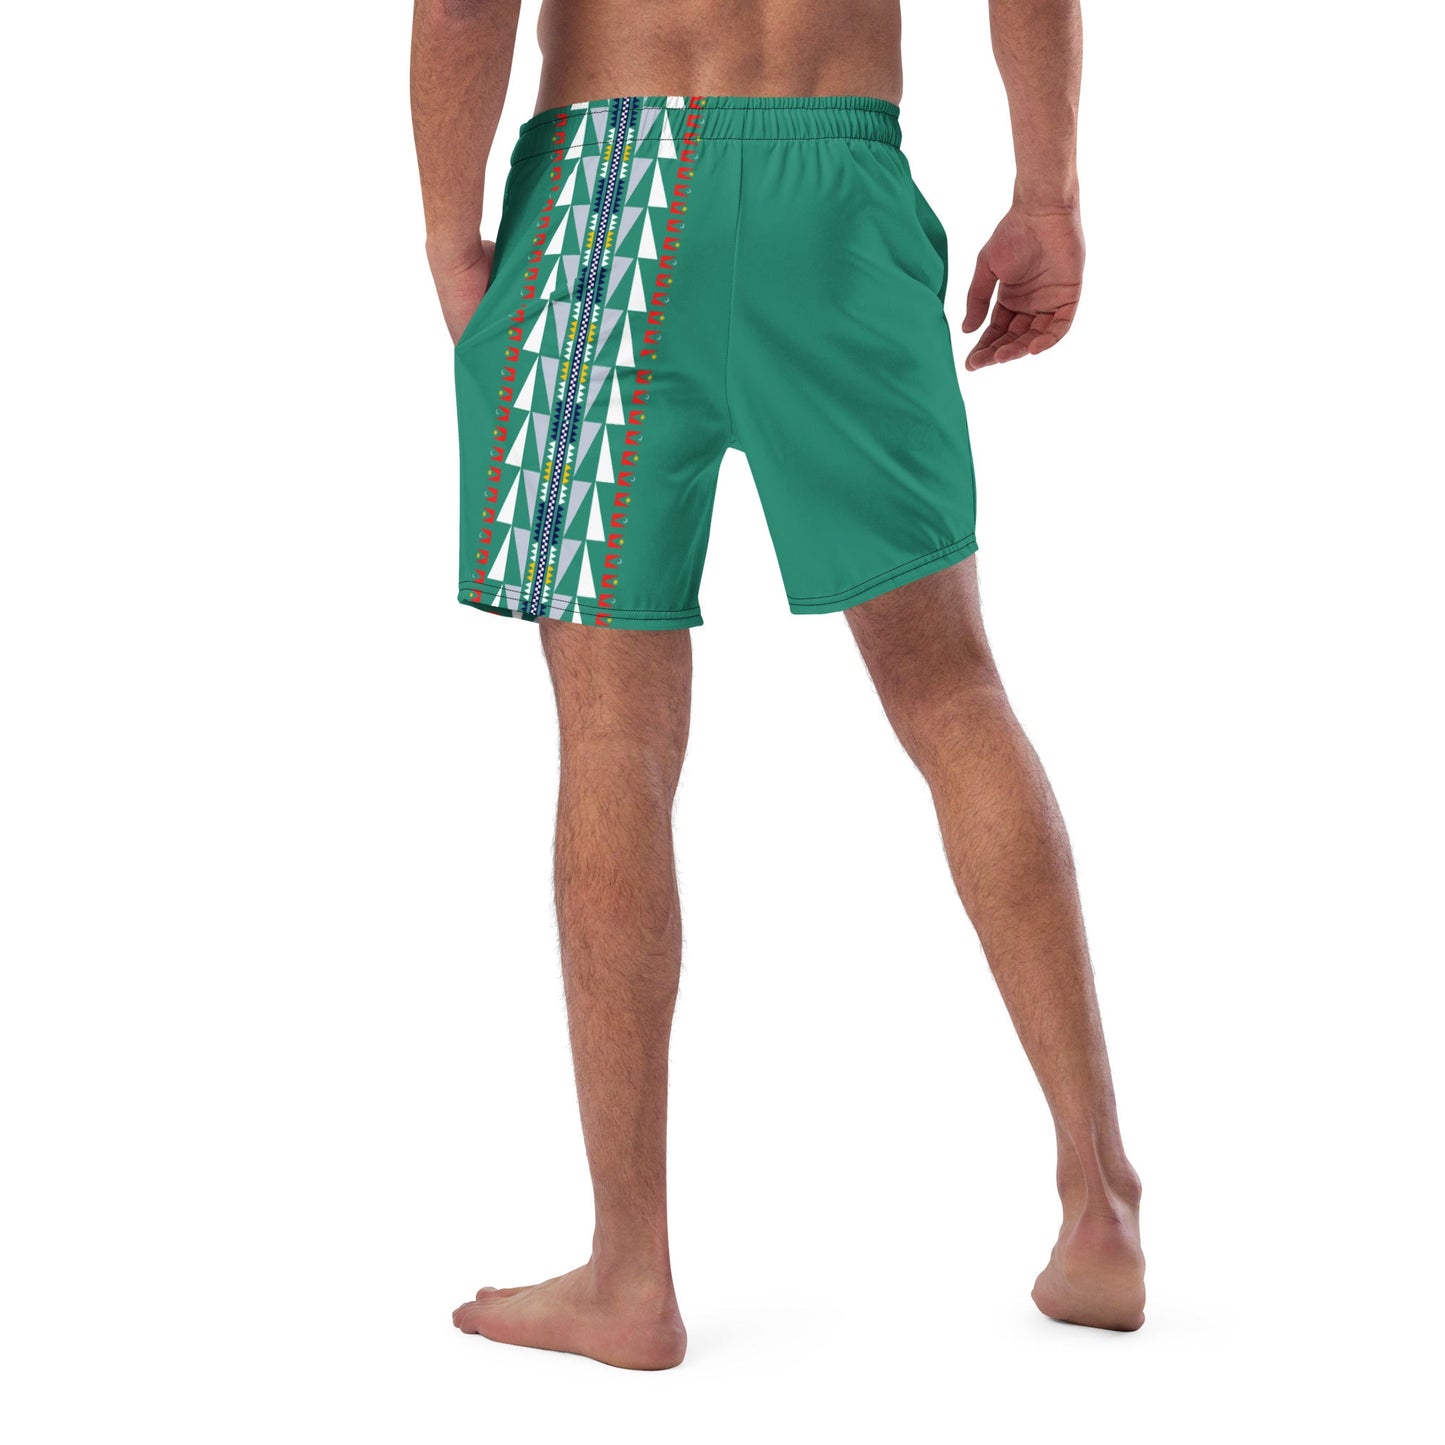 Men's swim trunks - Nikikw Designs